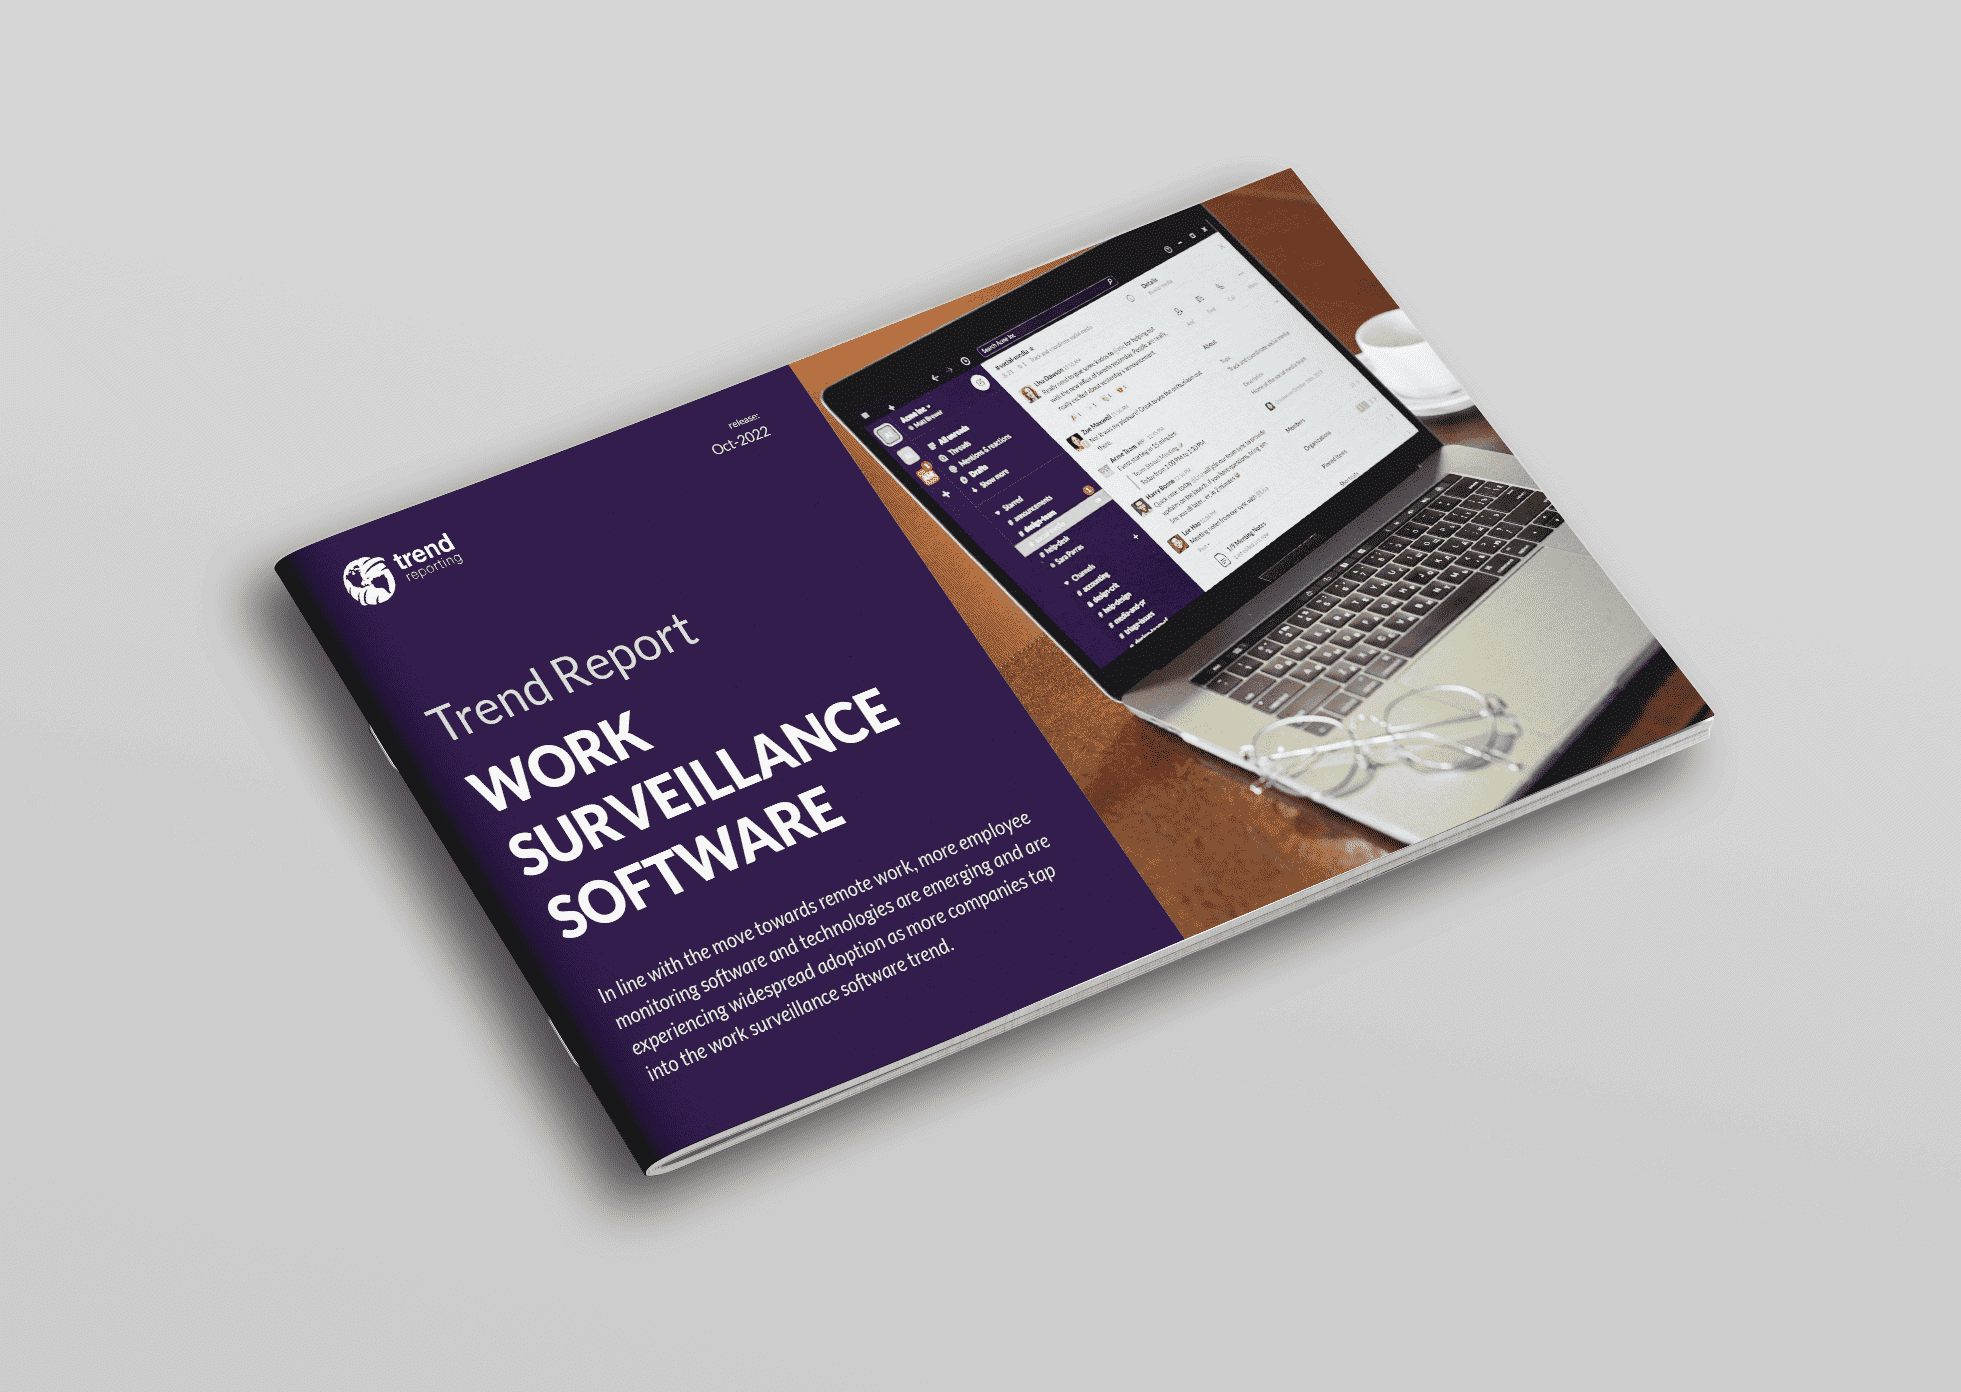 Work-surveillance-software-cover